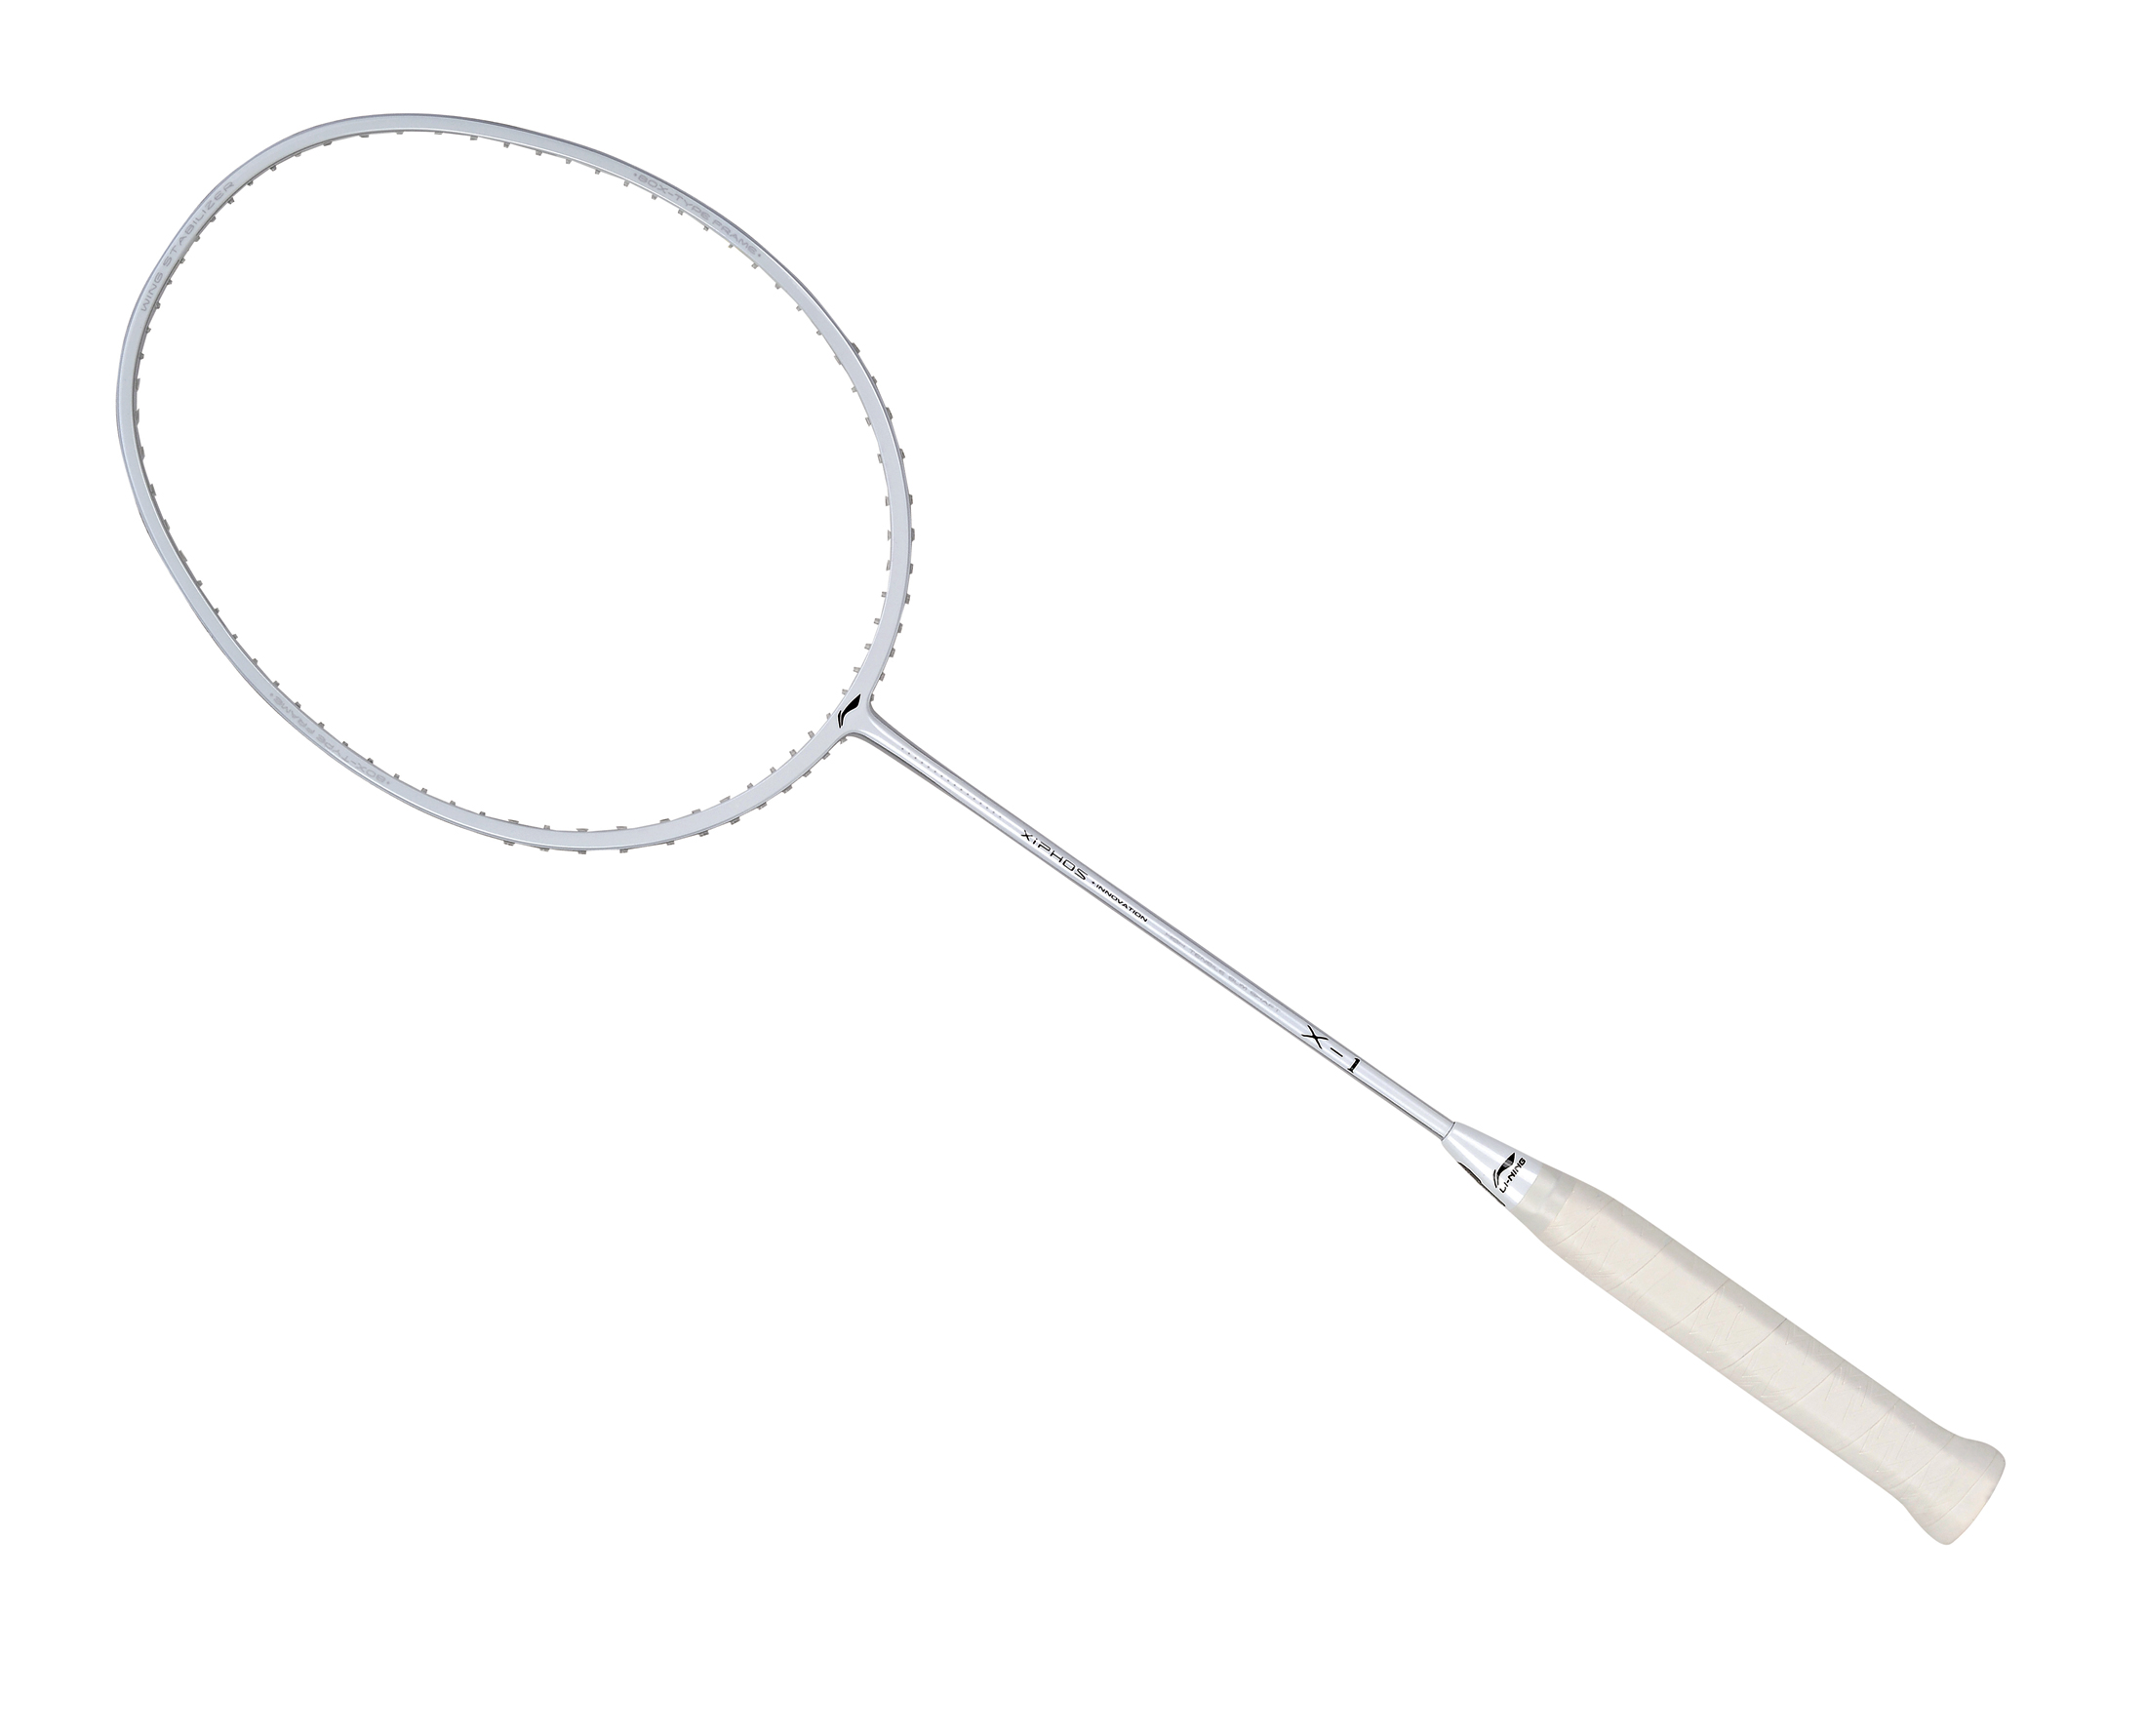 Parts Of A Badminton Racket